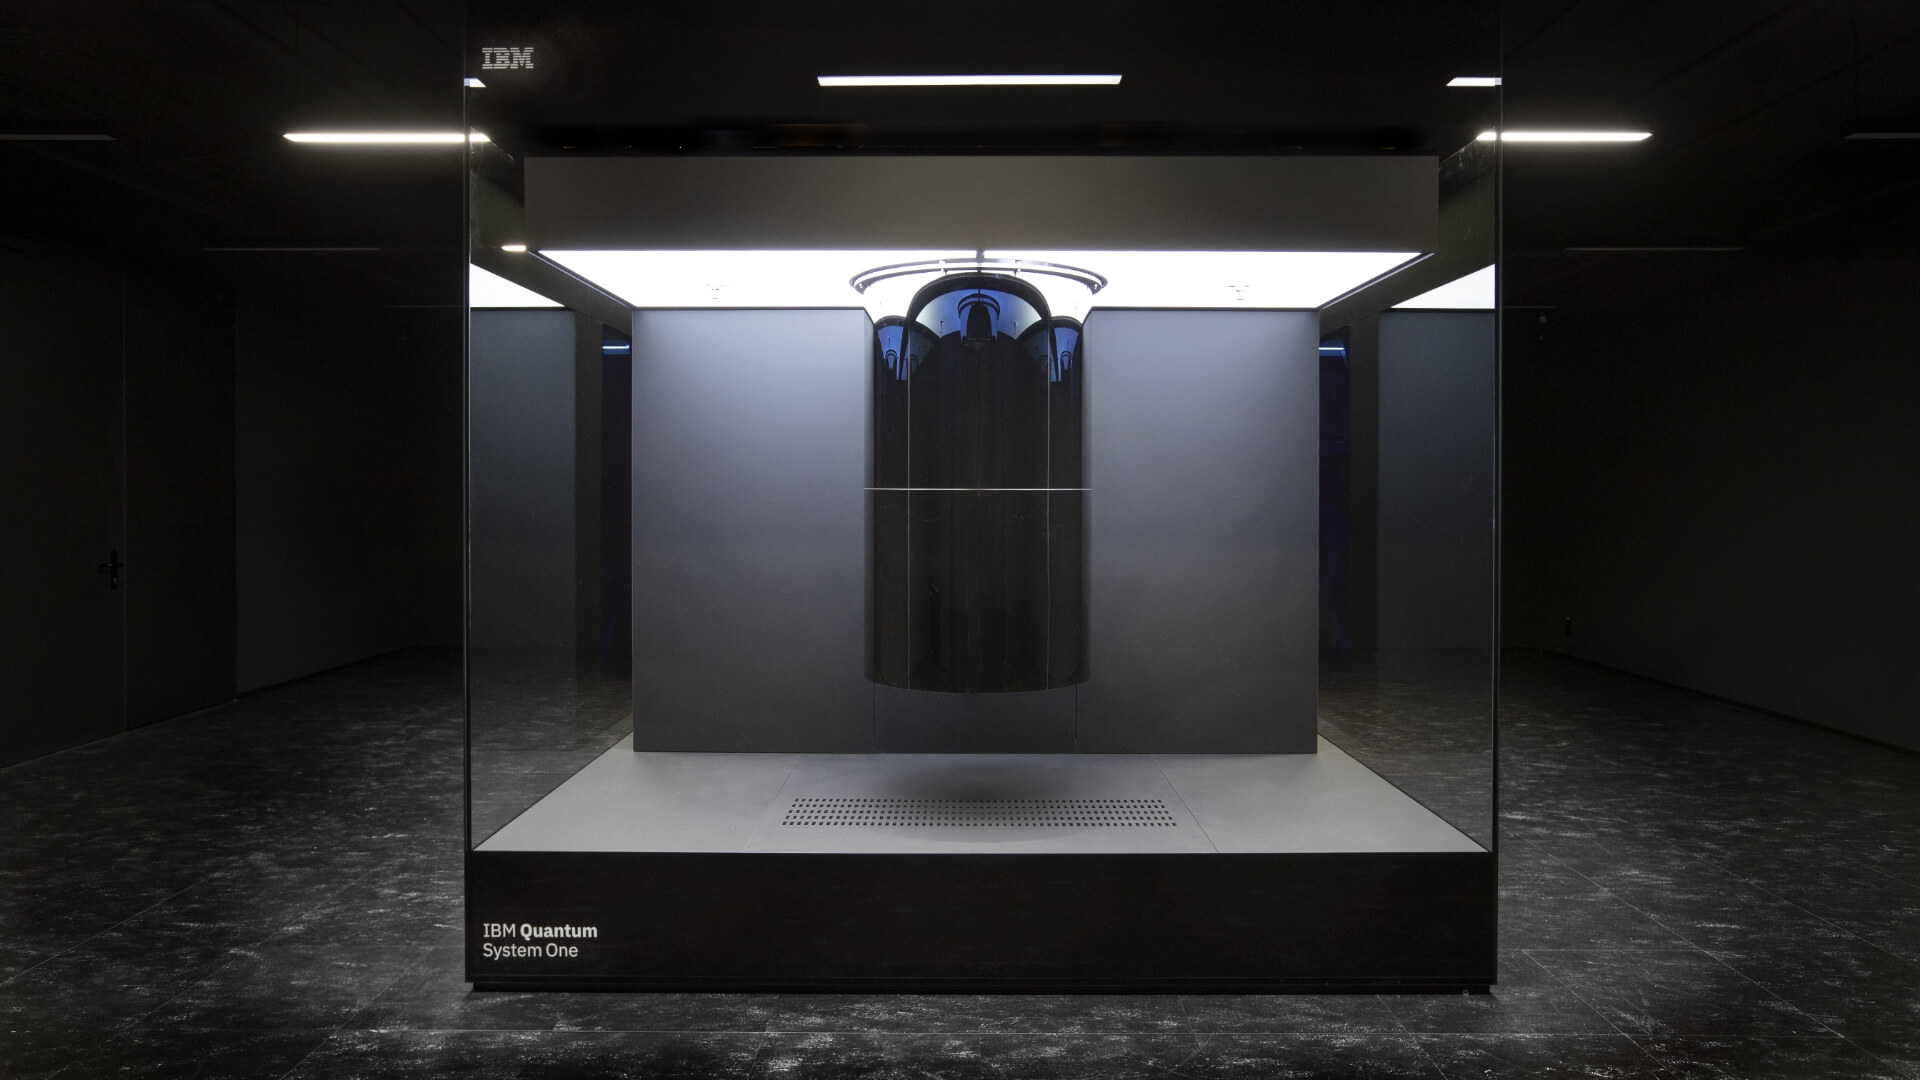 IBM Supercomputer 